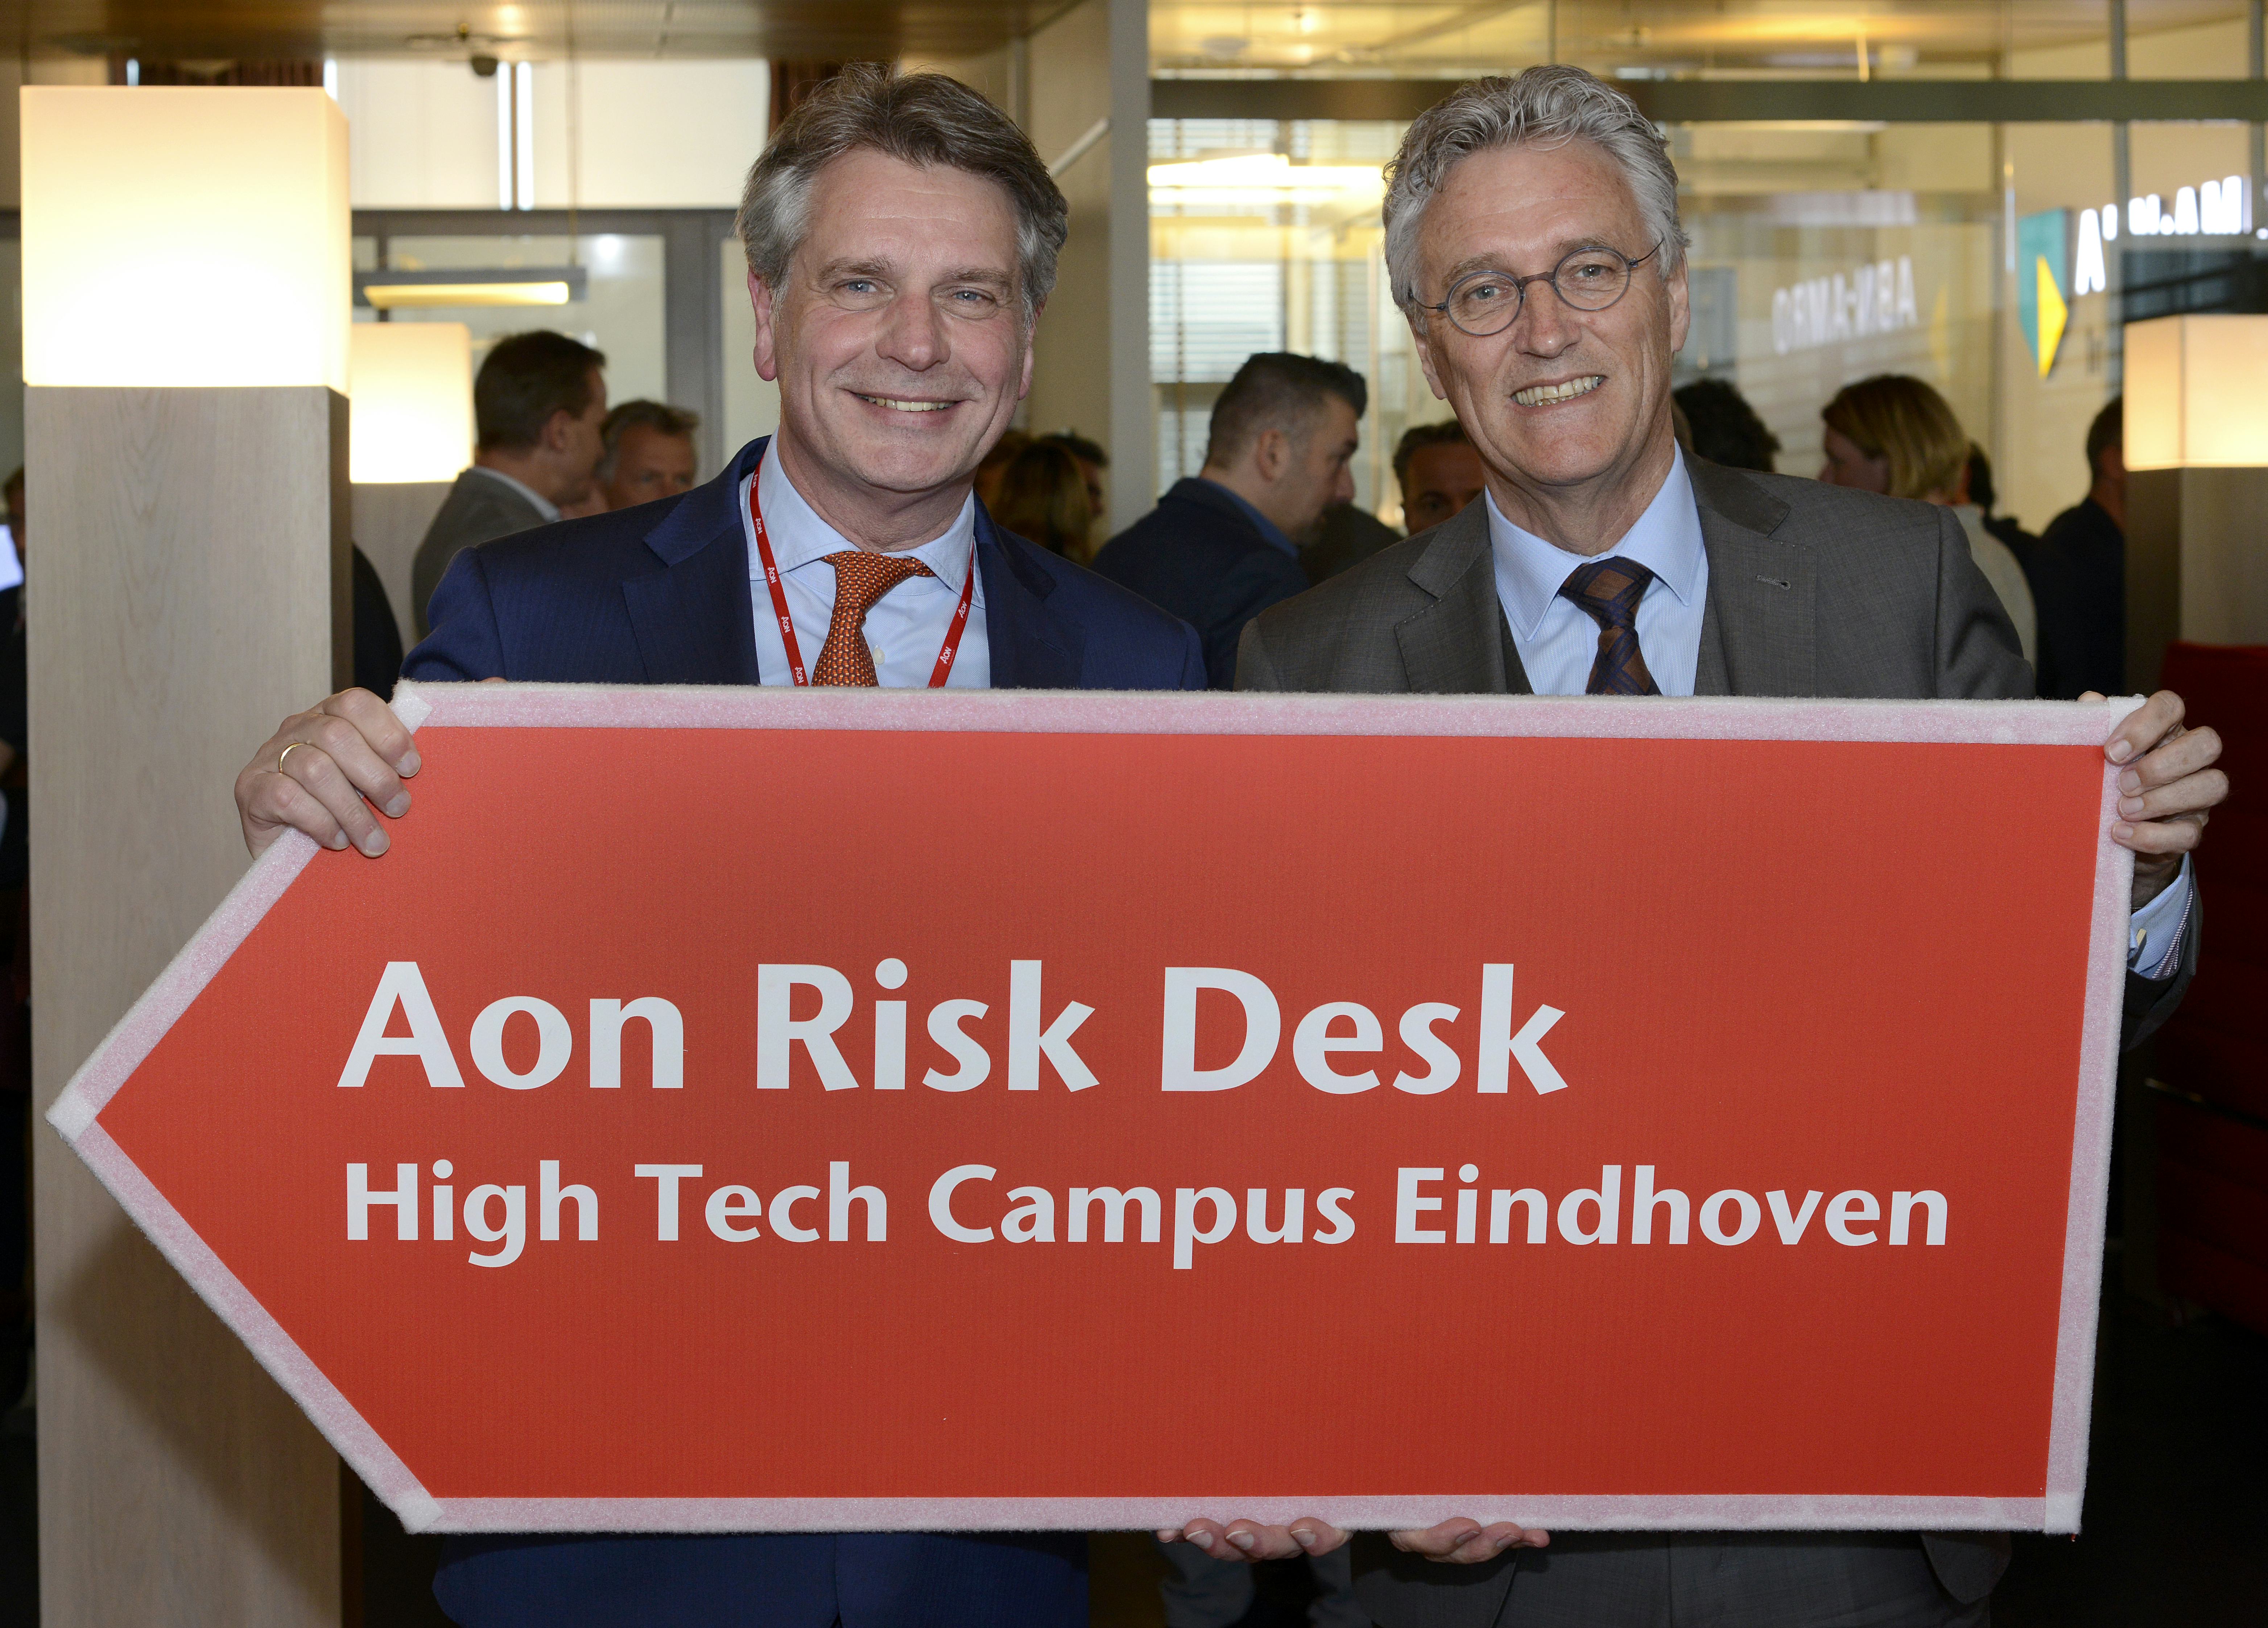 Aon opent nieuw kenniscentrum op High Tech Campus in Eindhoven